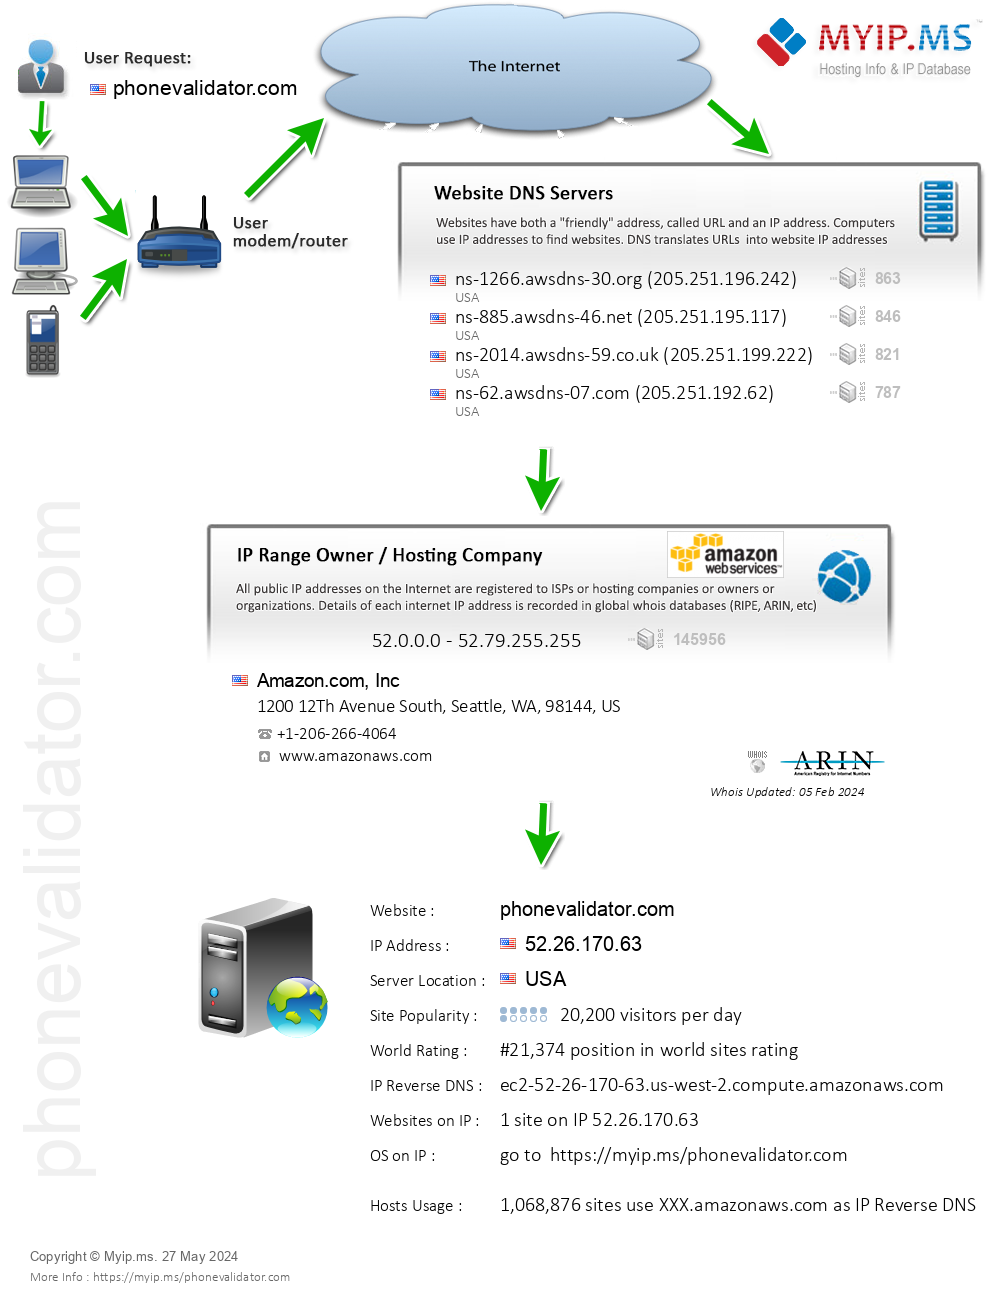 Phonevalidator.com - Website Hosting Visual IP Diagram